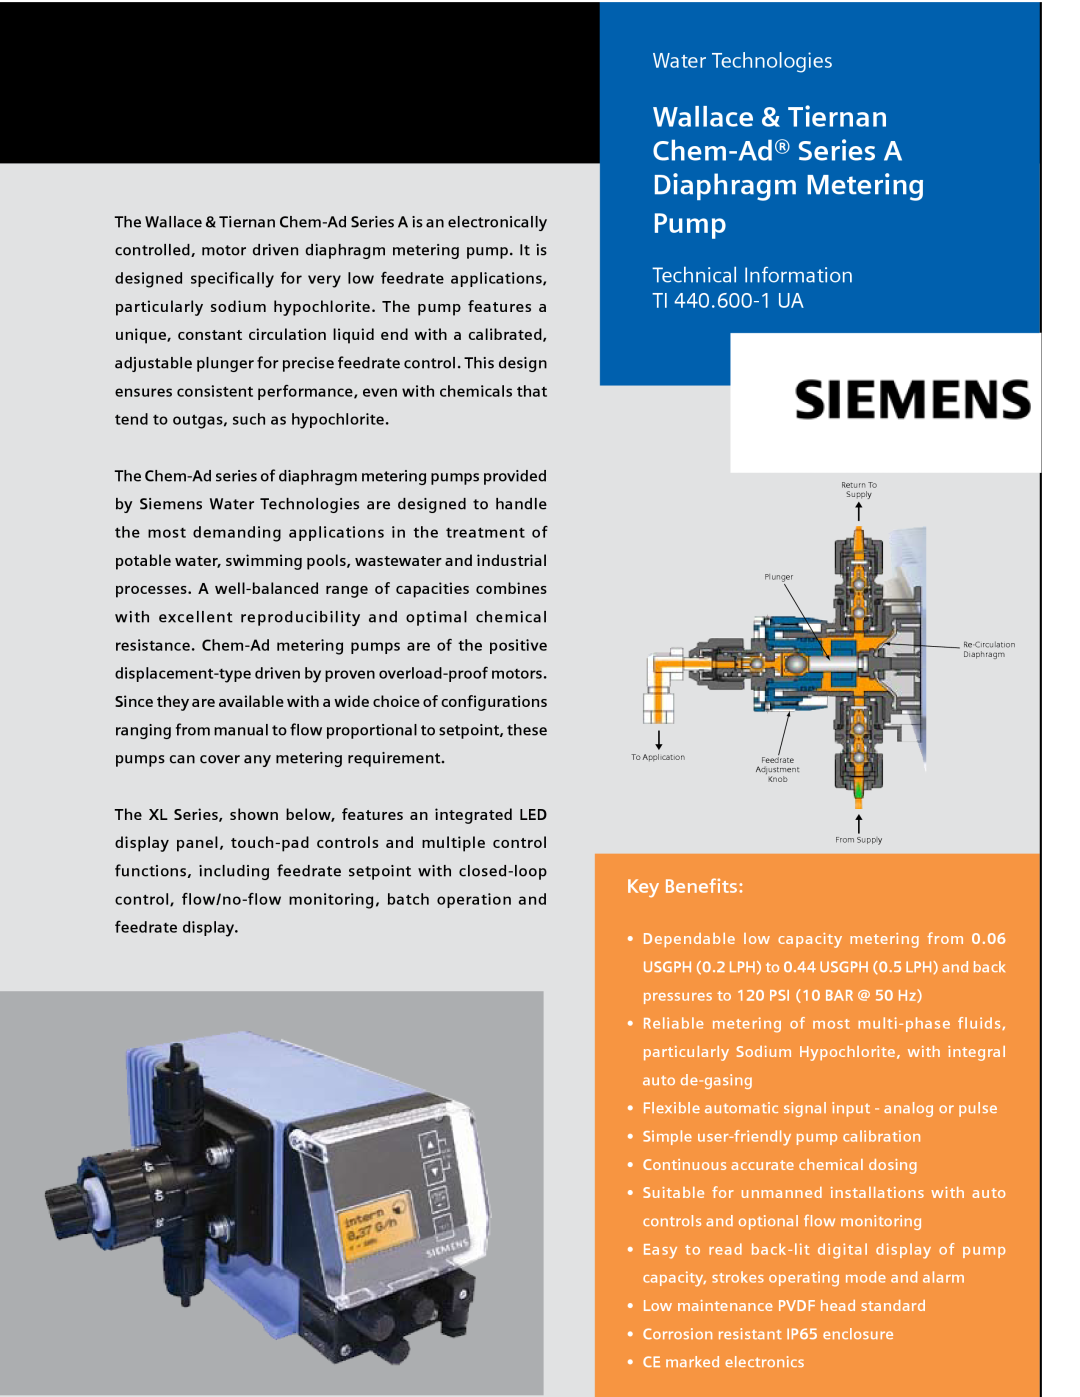 Siemens Chem-Ad Series manual Wallace & Tiernan Chem-AdSeries A, Diaphragm Metering Pump, Water Technologies, Key Benefits 